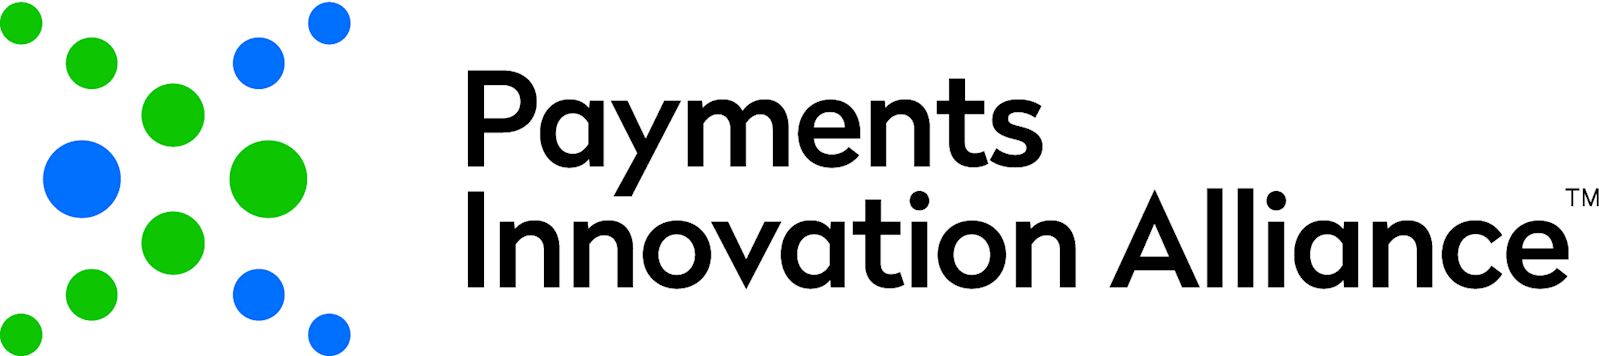 Payments innovation alliance logo